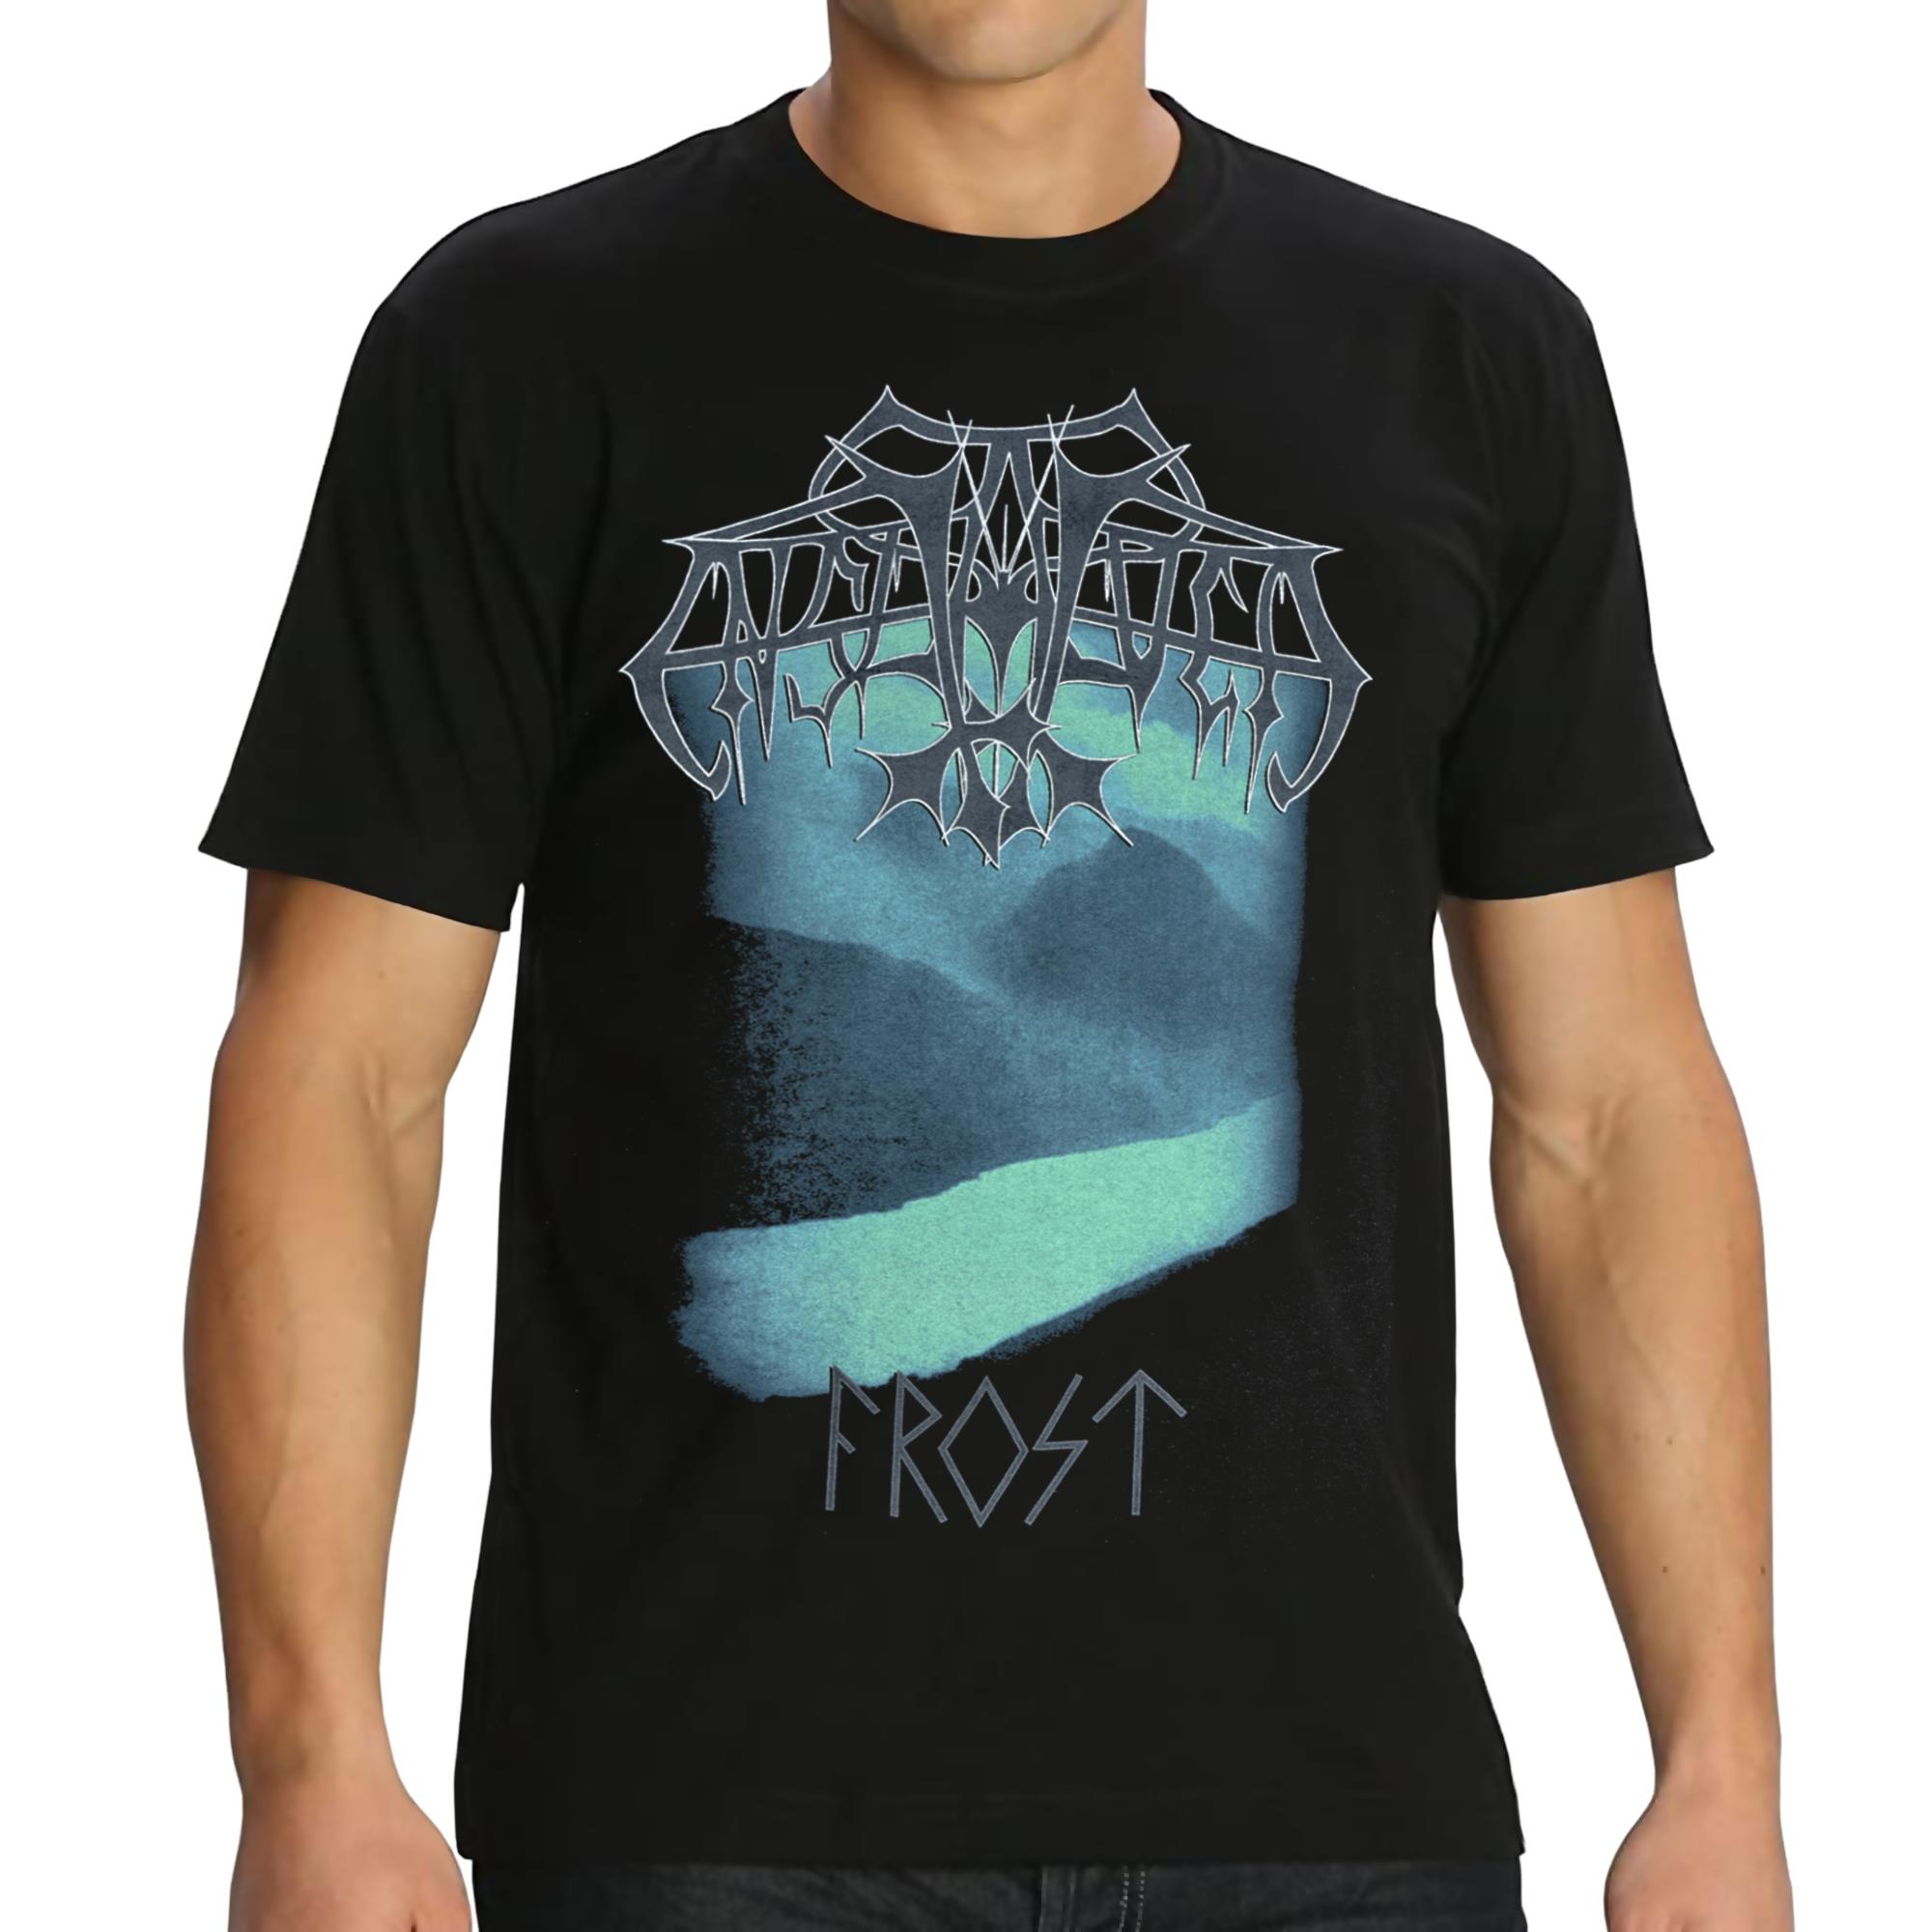 Frost Album Cover T-Shirt